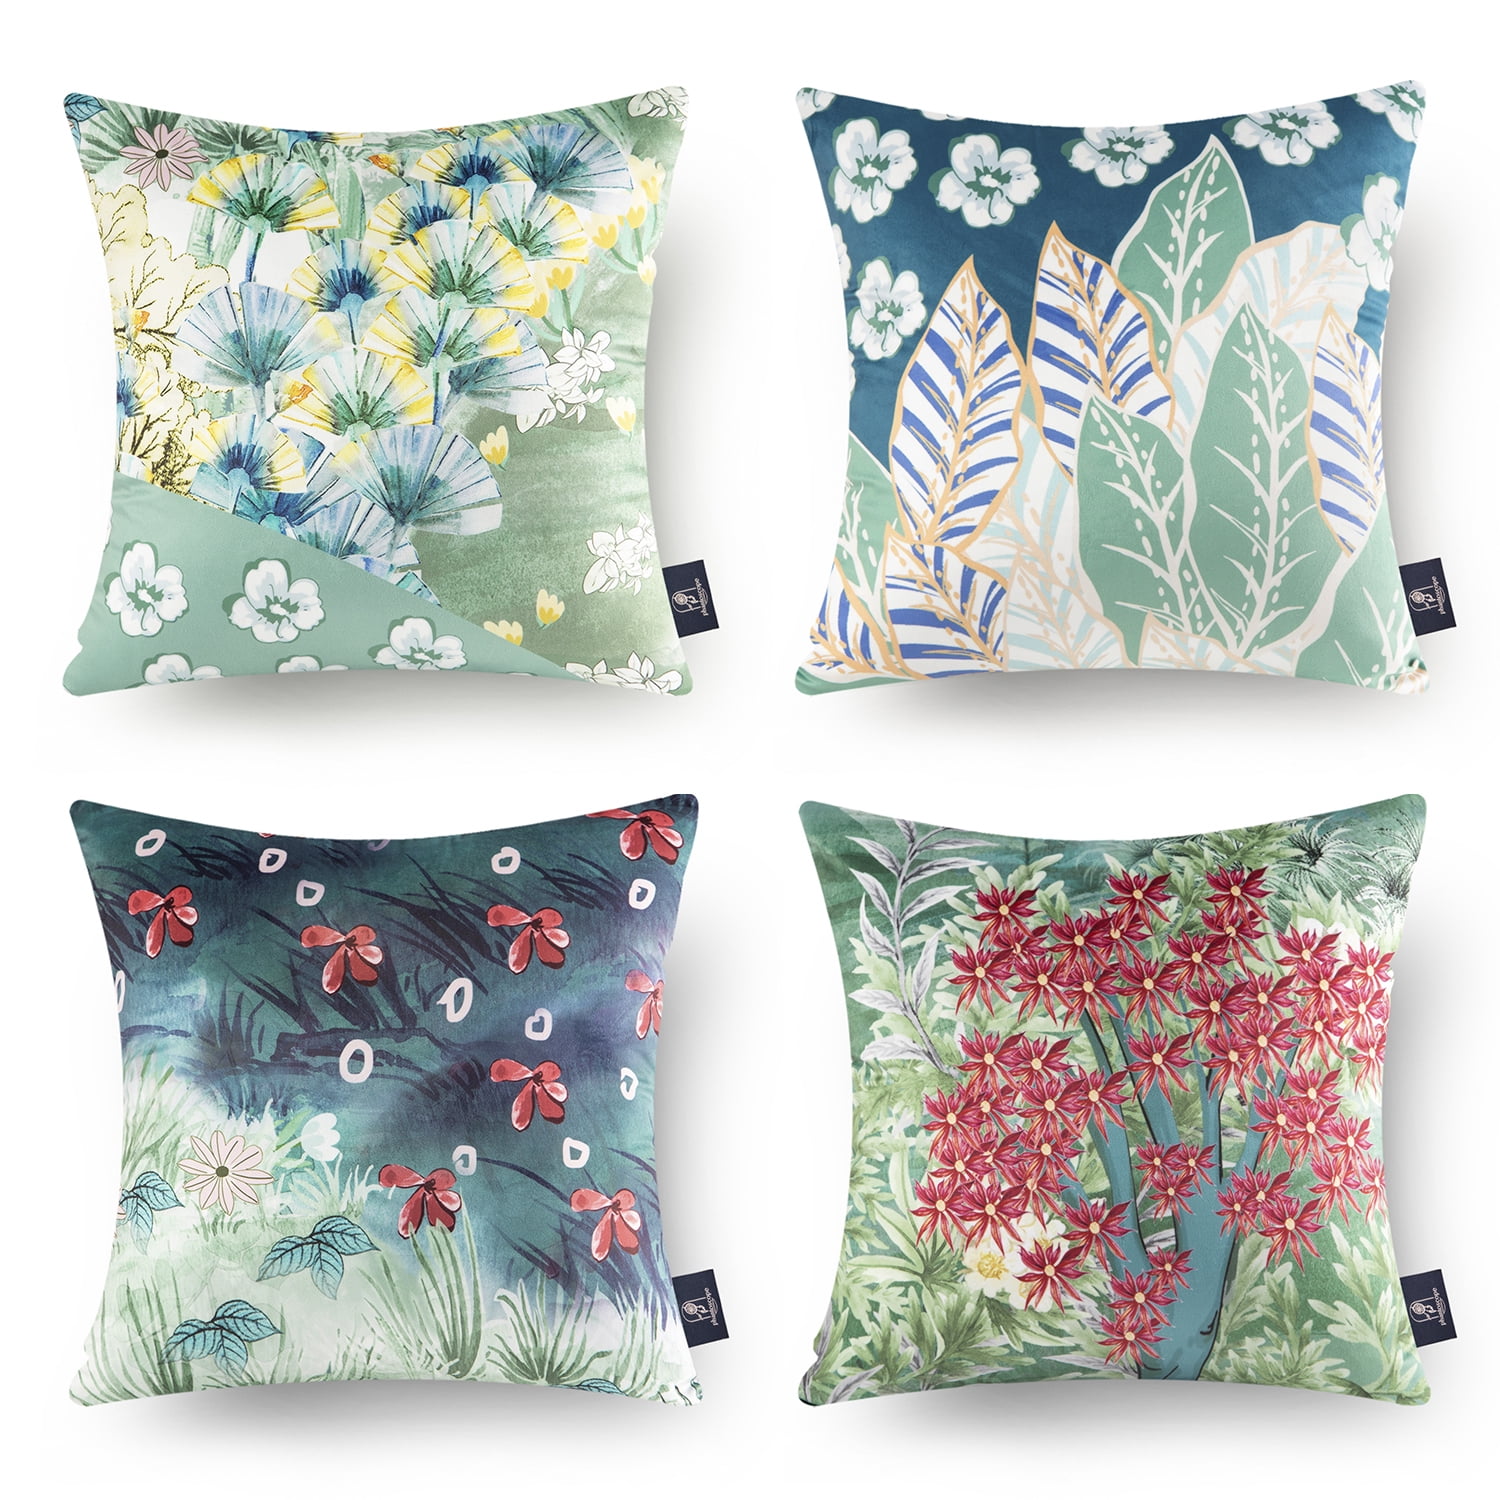 18"*18" Cotton Linen Floral Tropical Pillow Case Waist Throw Cushion Cover Decor 